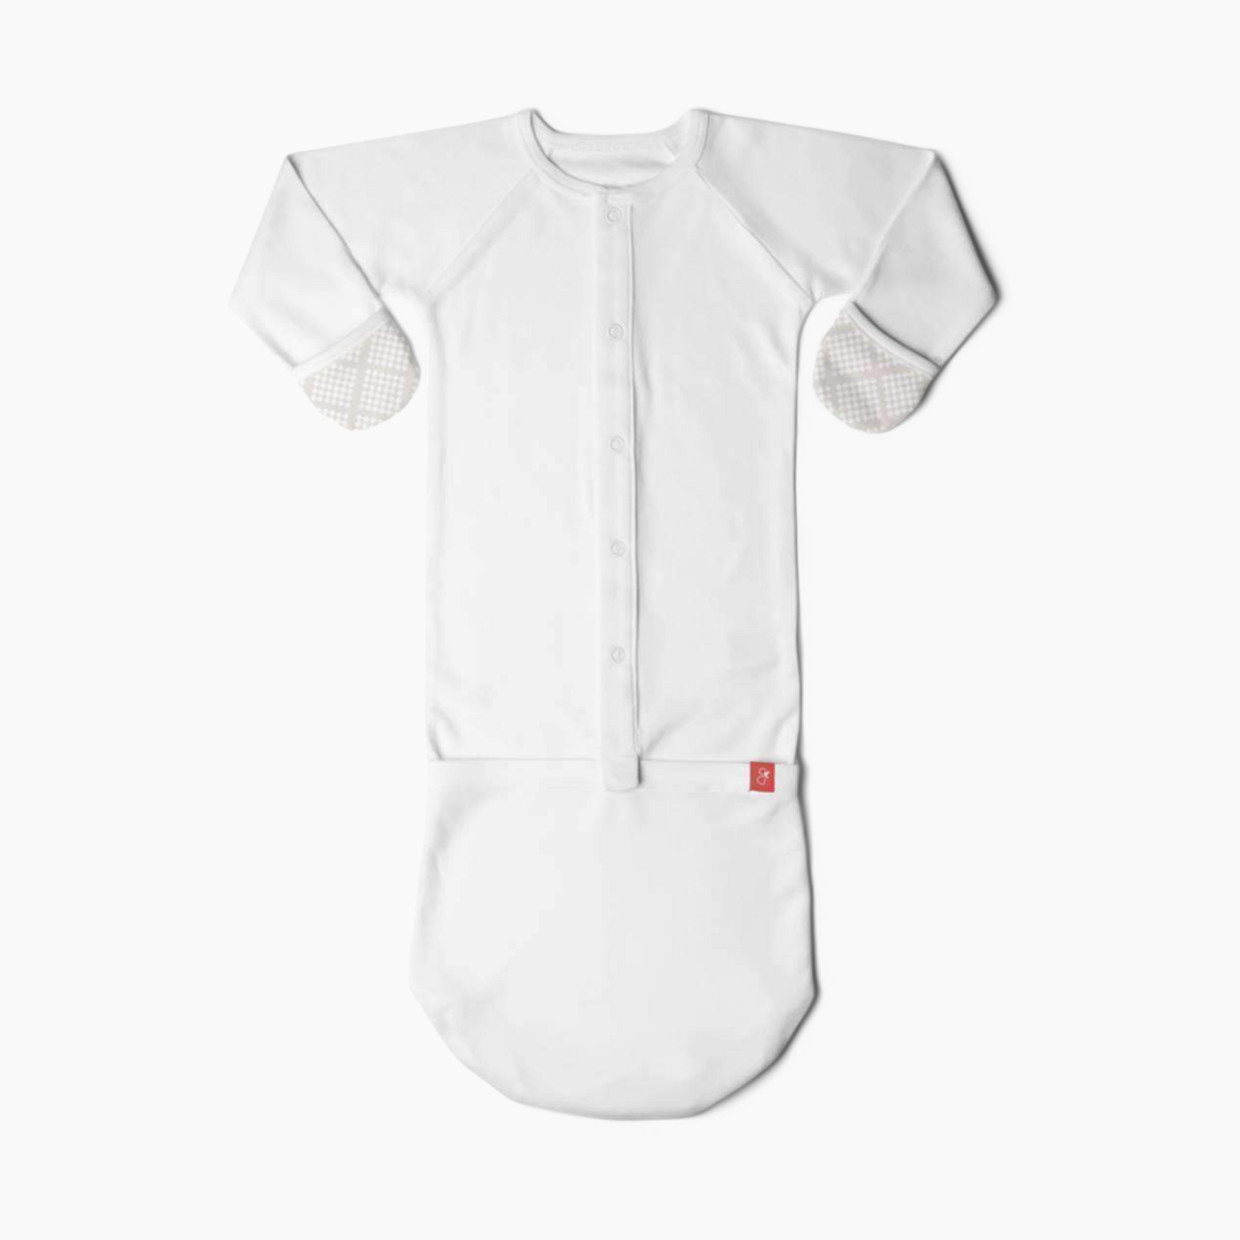 Goumi Kids 24 hr Convertible Sleeper Baby Gown - Diamond Dots Cream, 0-3 M.